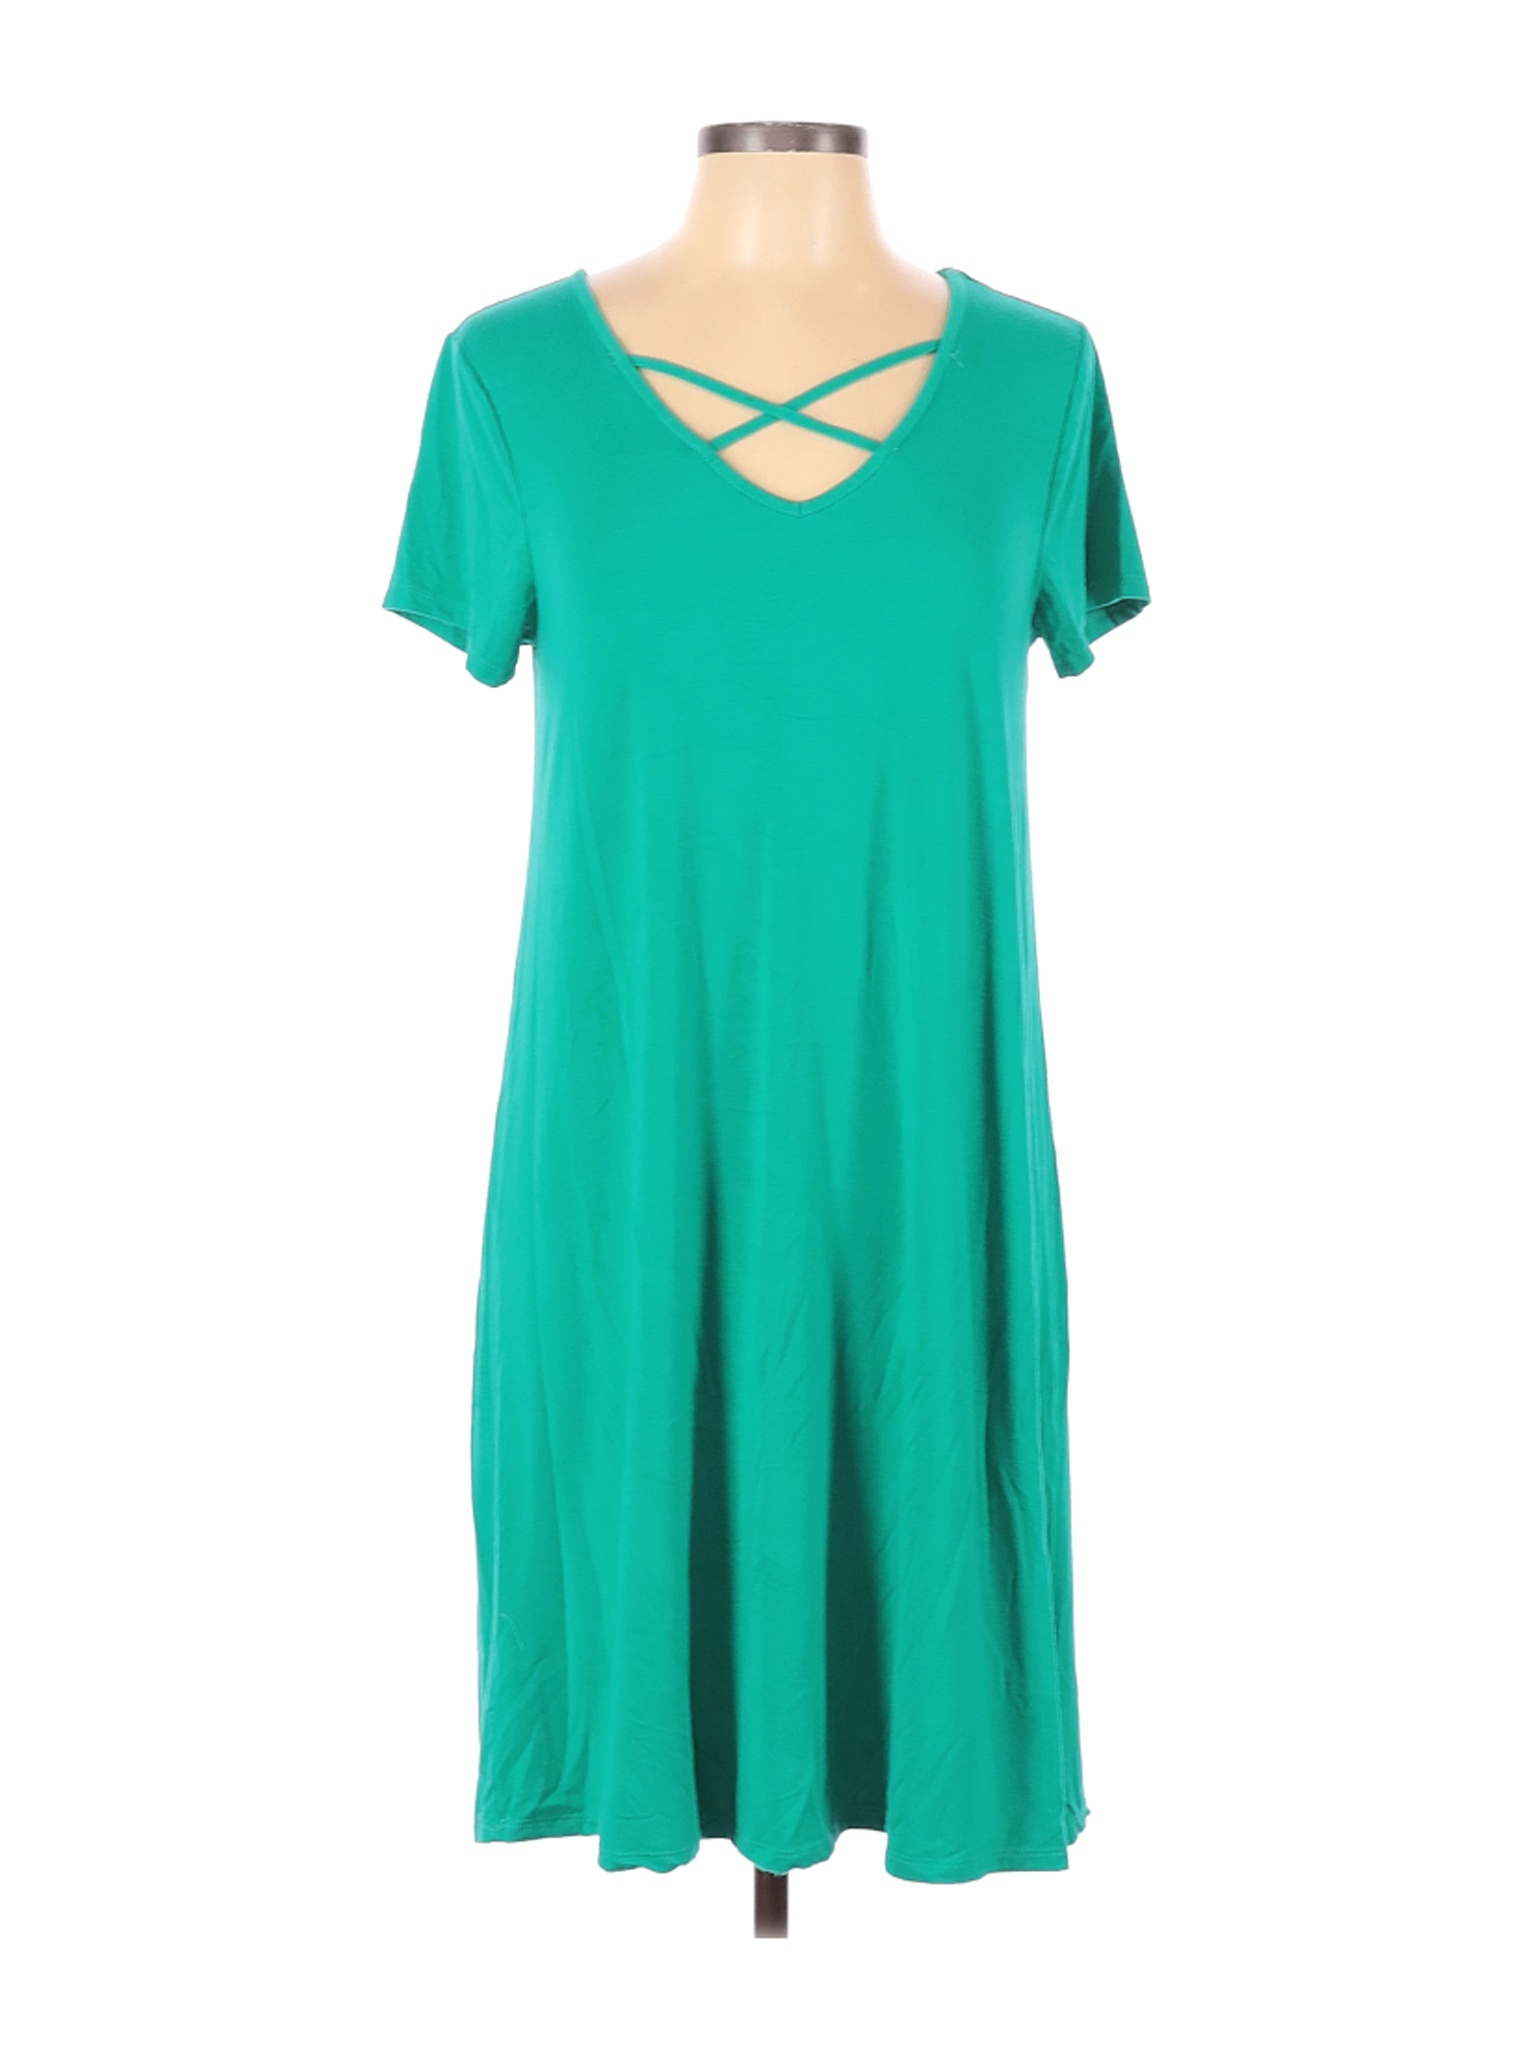 Cupio Women Blue Casual Dress L | eBay